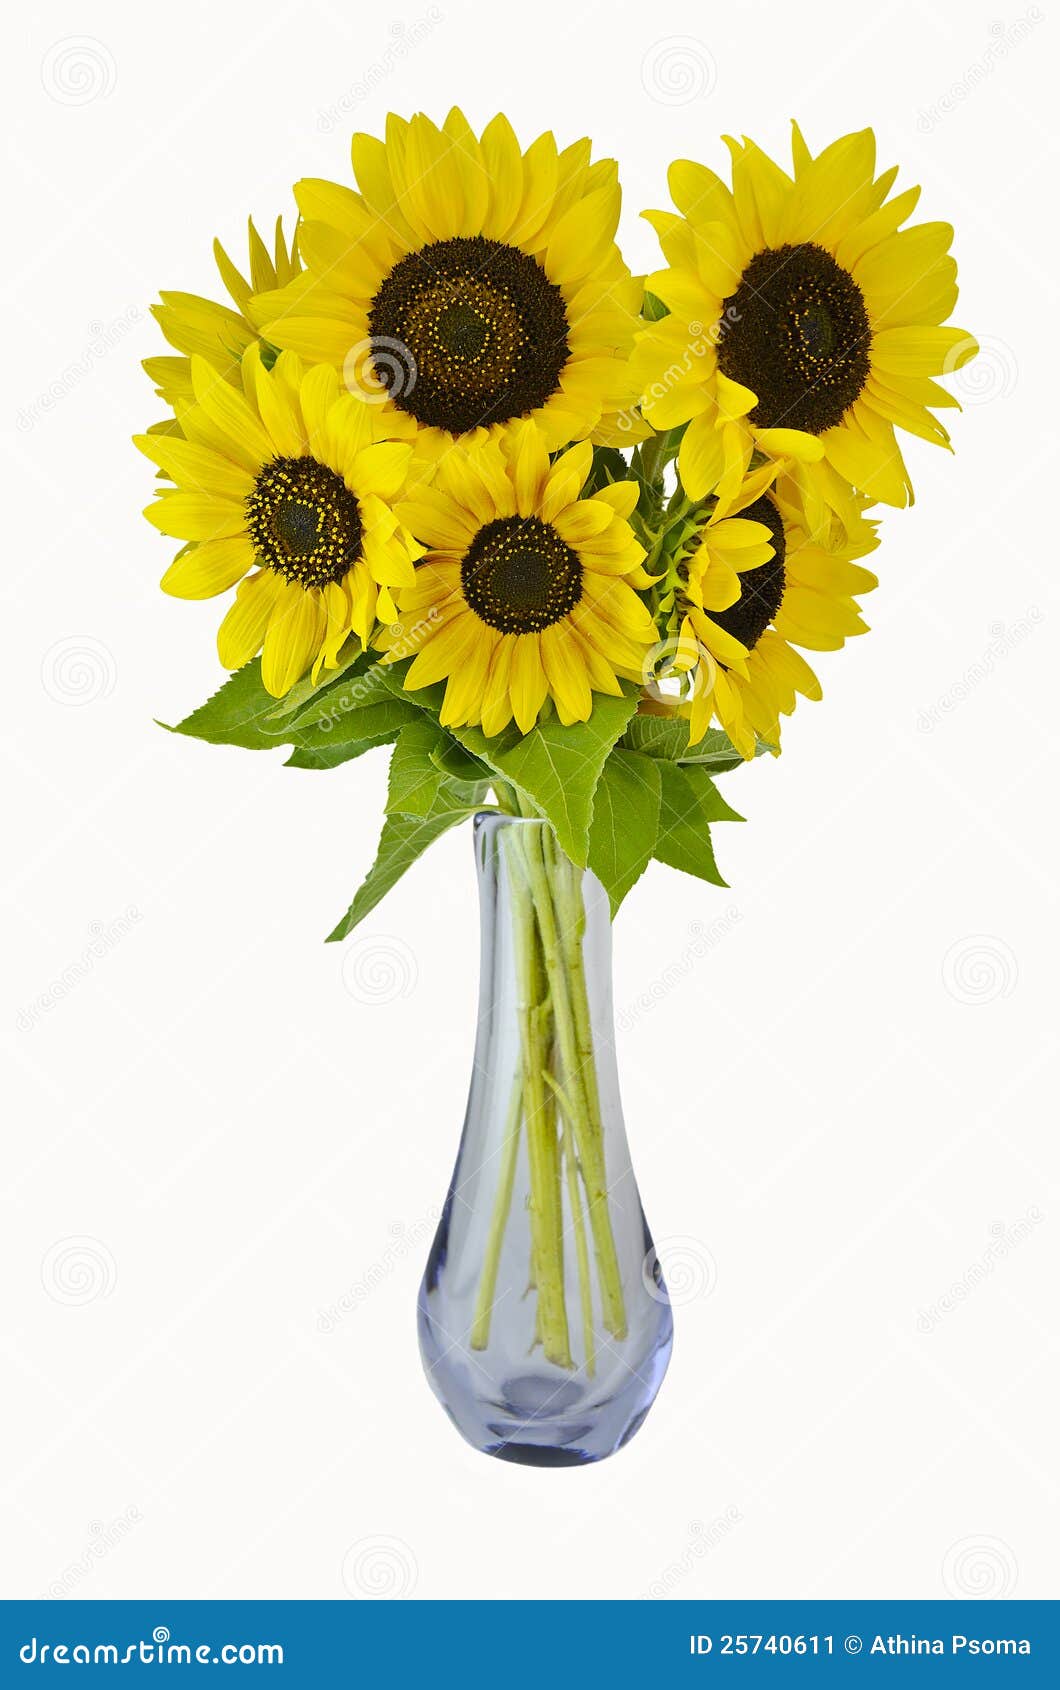 Sunflowers In Vase Stock Image - Image: 25740611